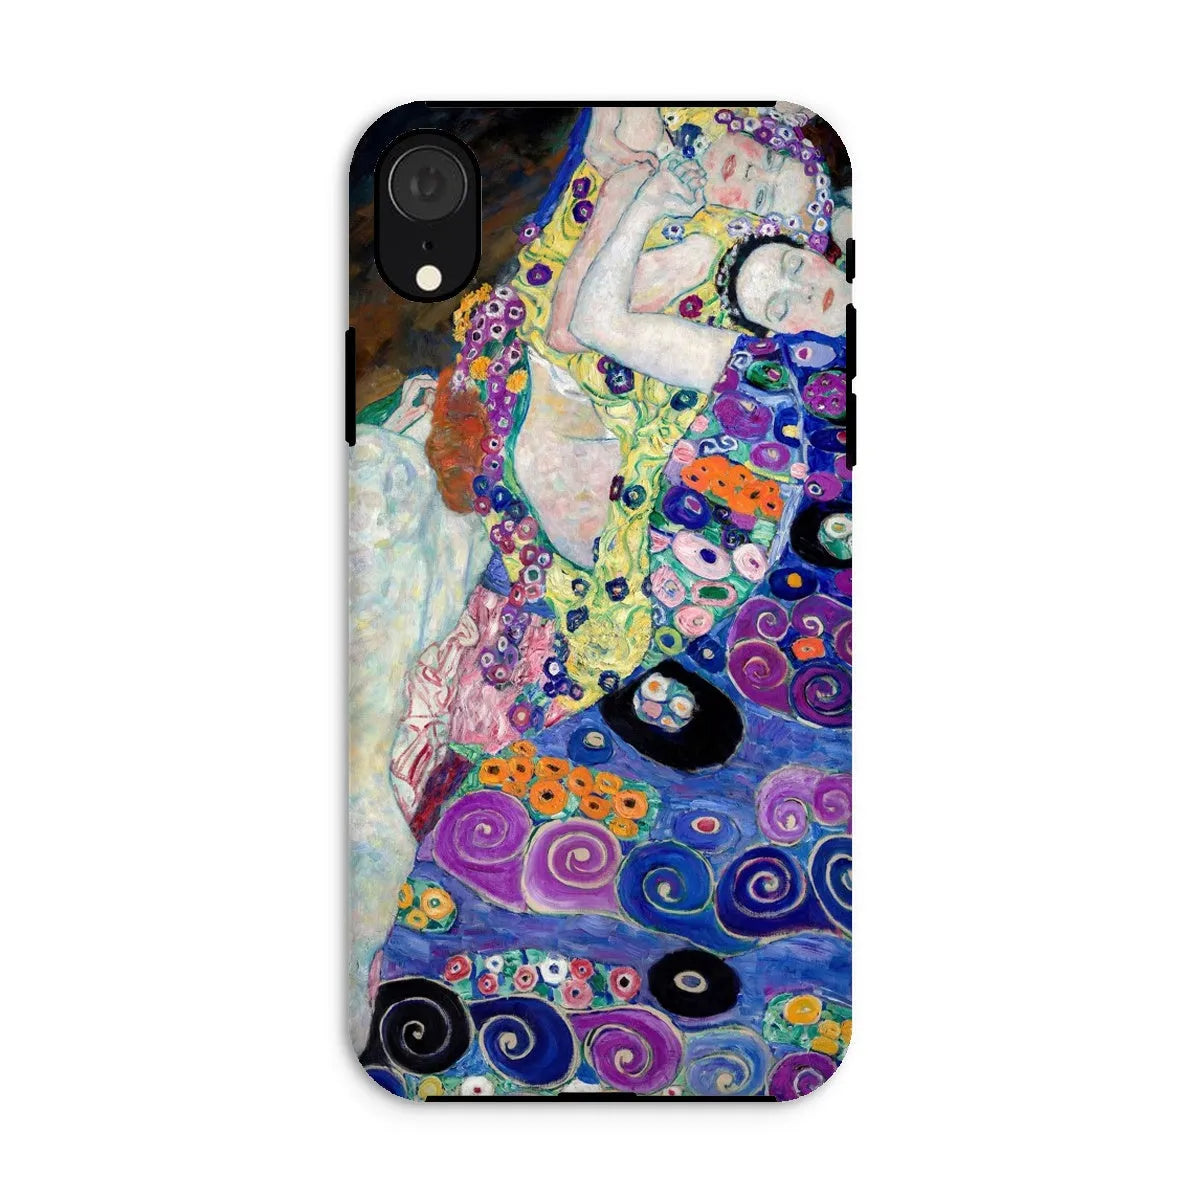 The Virgin - Vienna Secession Phone Case - Gustav Klimt - Iphone Xr / Matte - Mobile Phone Cases - Aesthetic Art